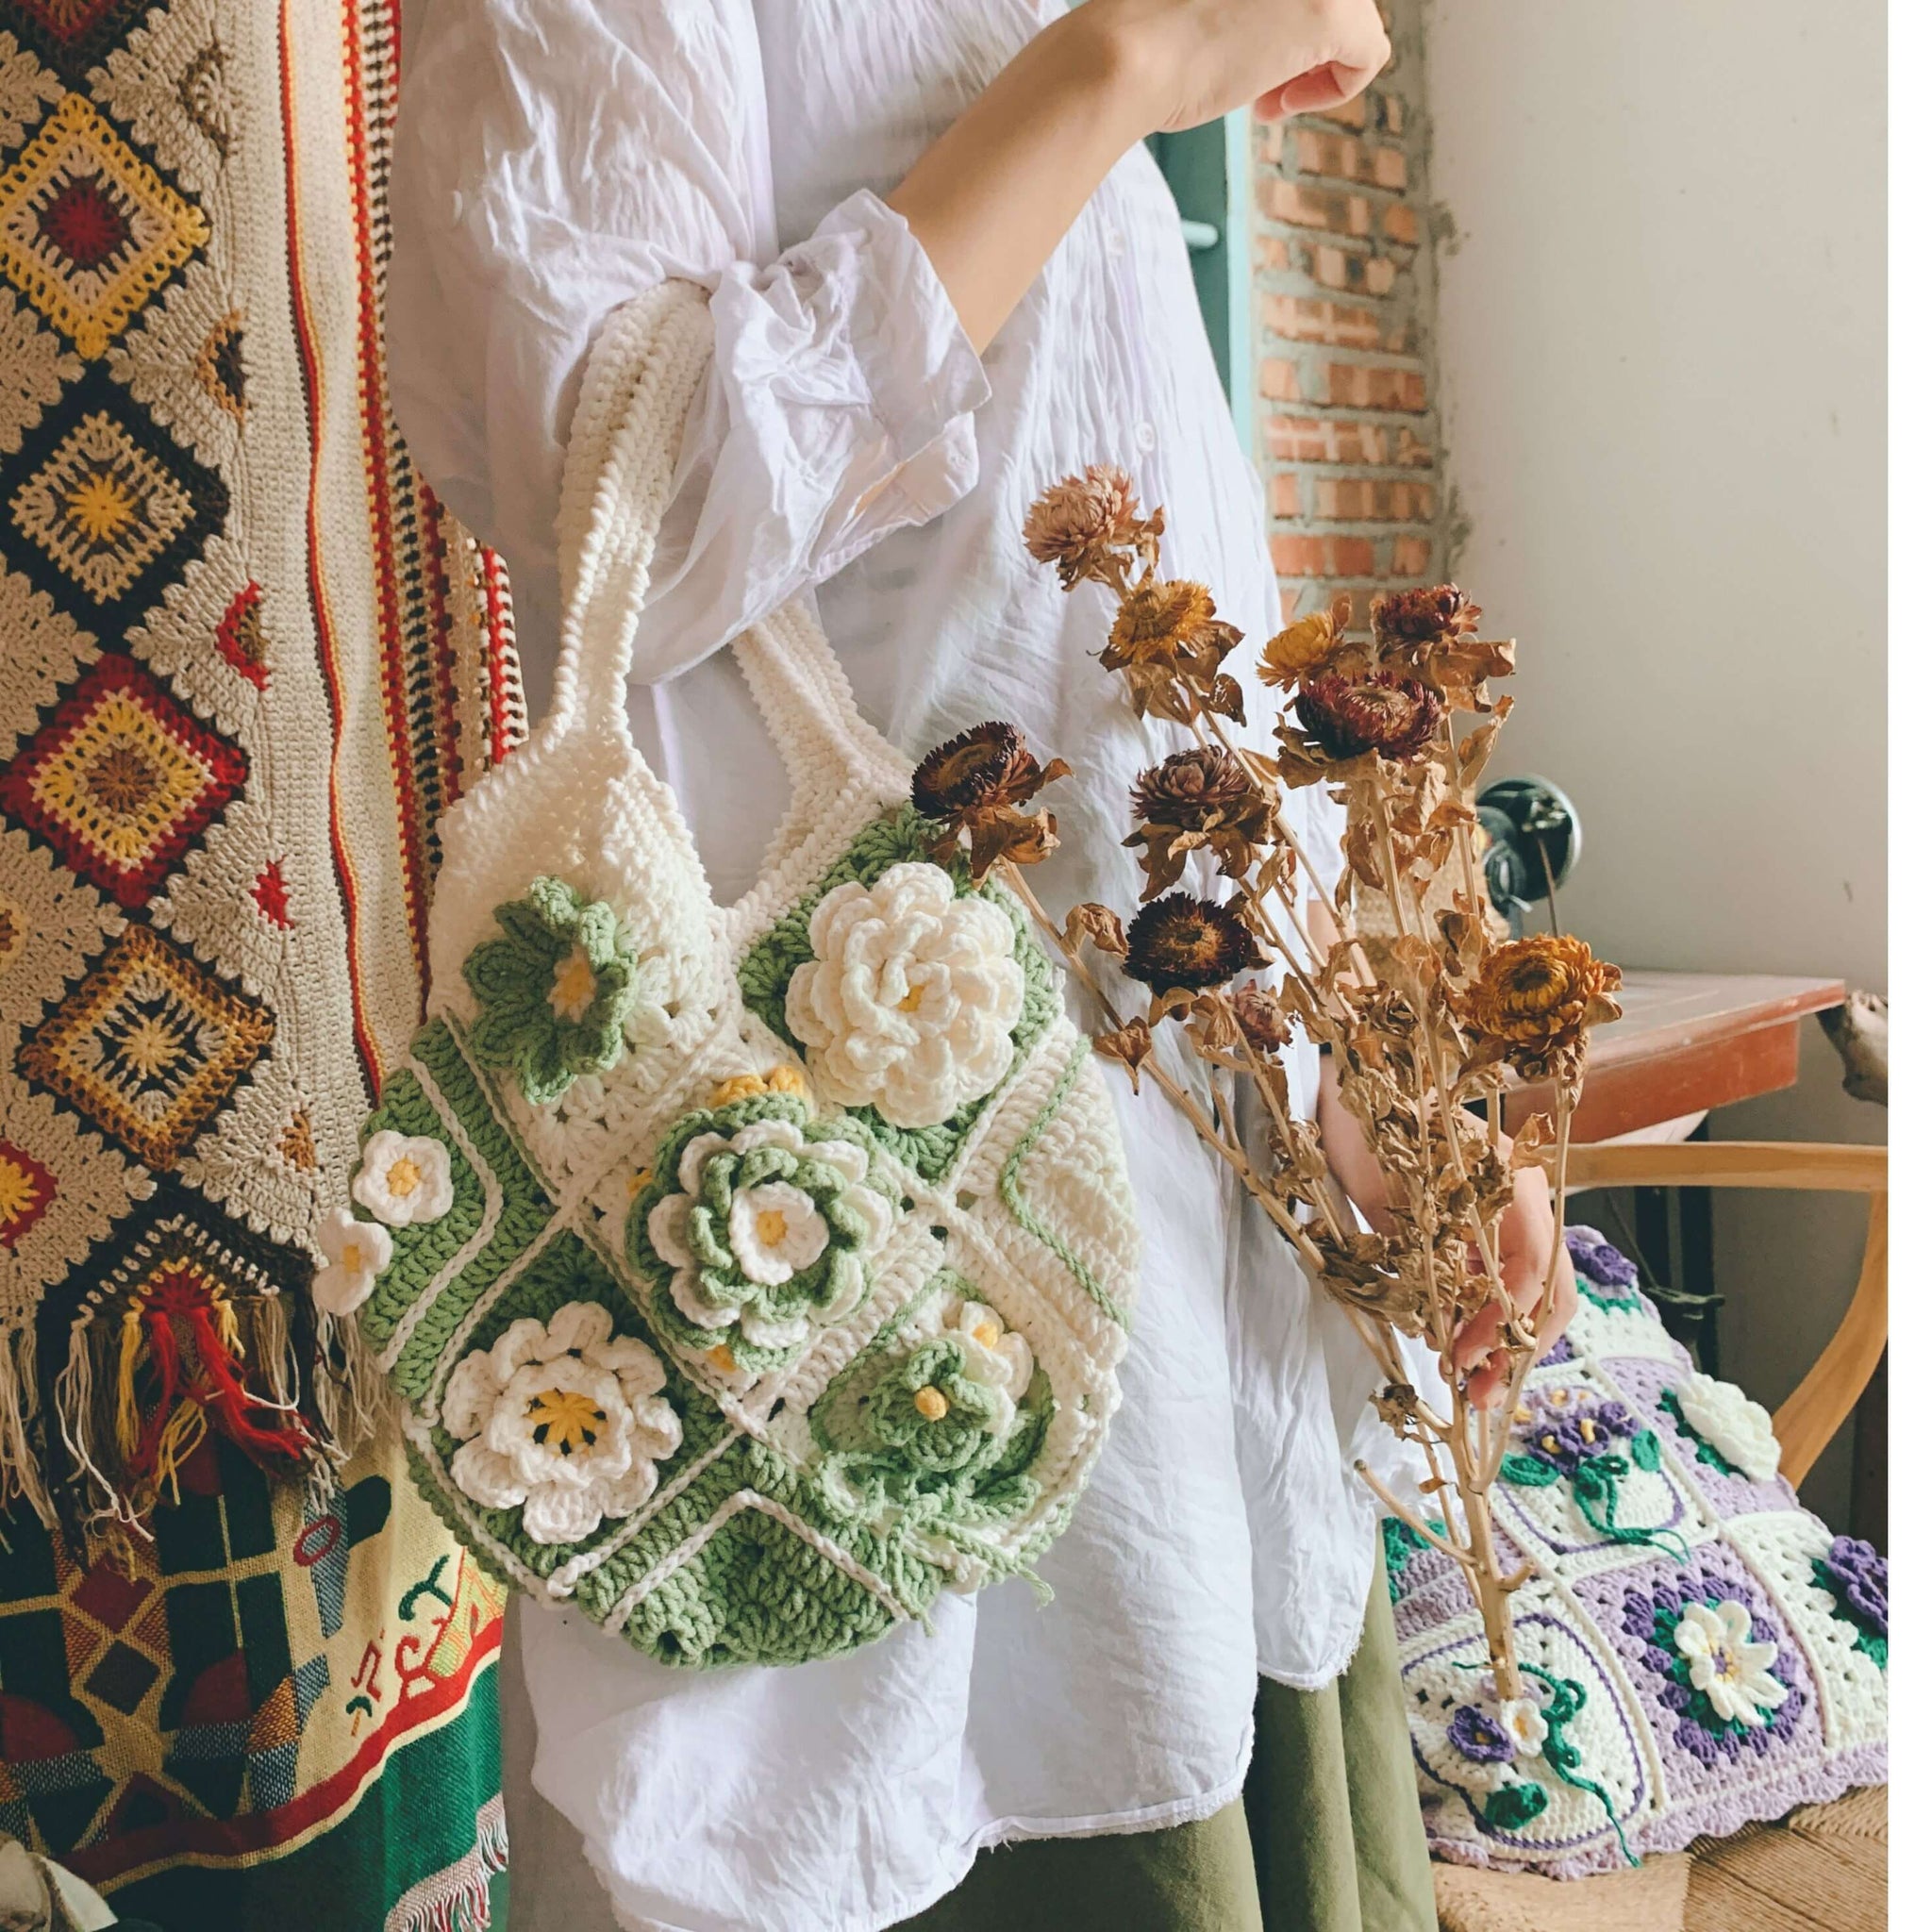 Crochet Bag DIY: 10 Pretty and Trendy Crochet Bag Patterns: (Summer Crochet,  Easy Crochet Patterns, Crochet Hook A, Crochet Accessories, Crochet Patterns,  Crochet Books): Amazon.co.uk: Rolex, Helen: 9781535355902: Books